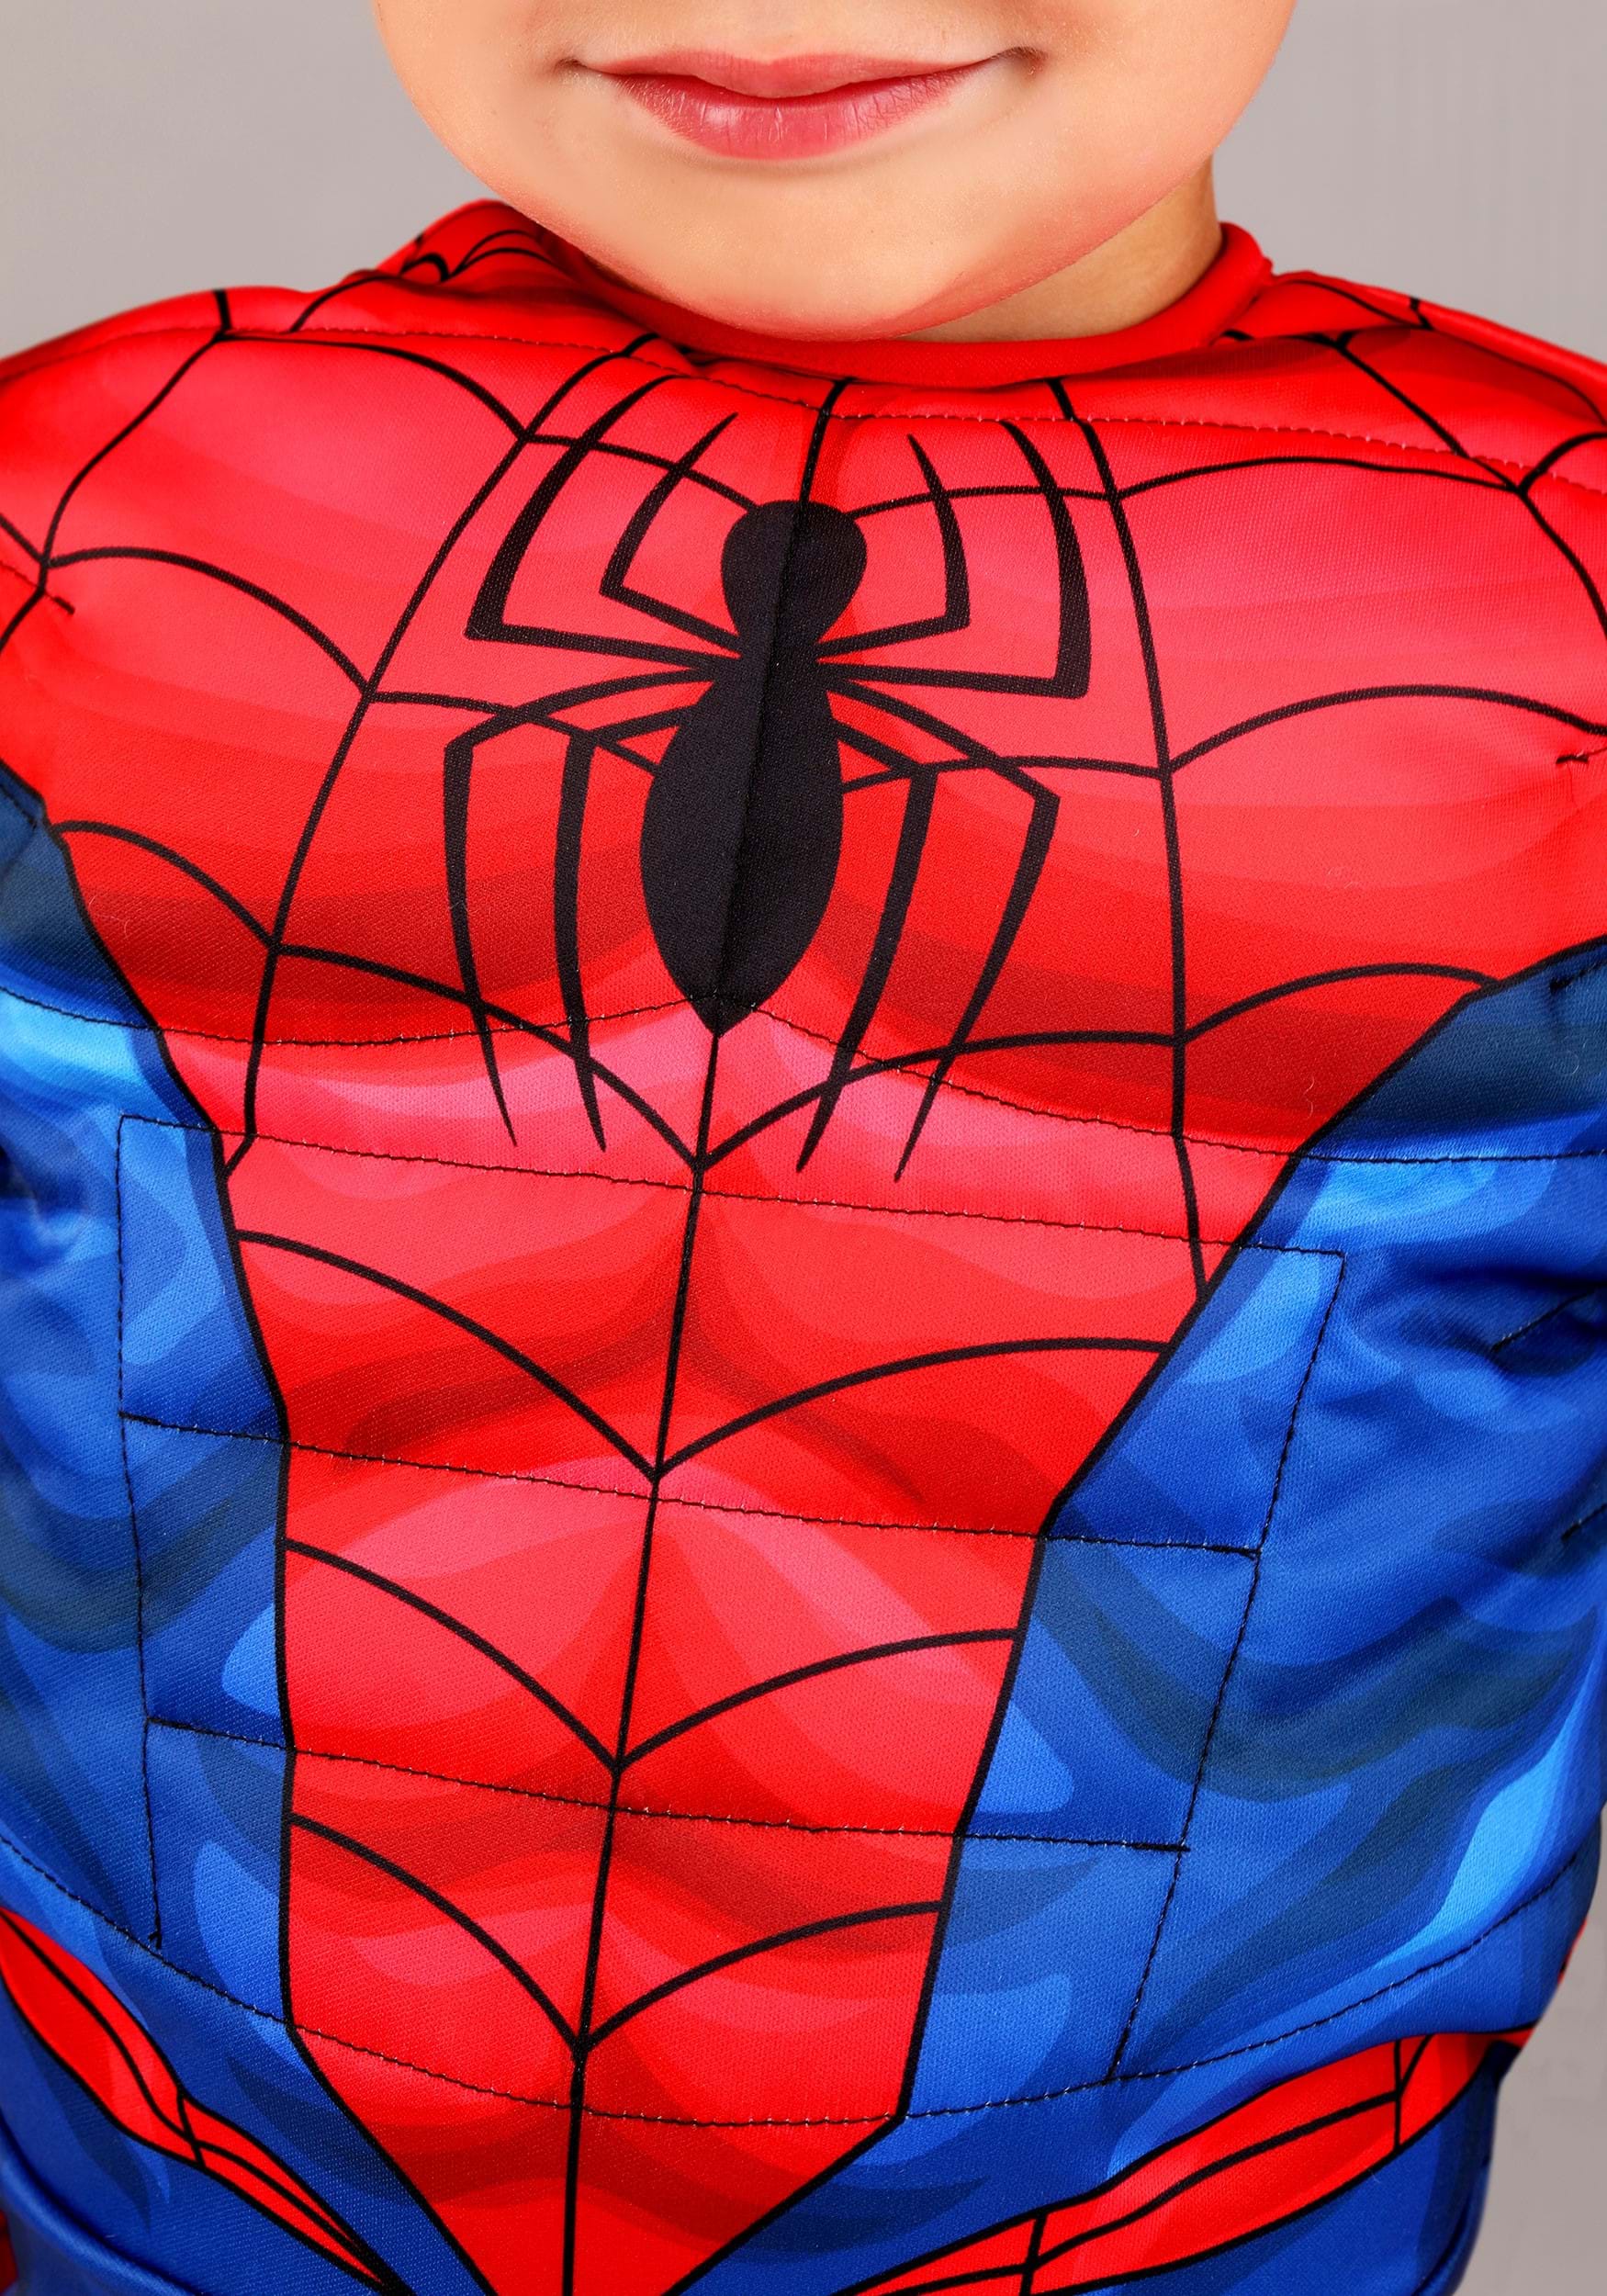 Marvel Spider-Man Toddler Costume , Kid's Marvel Costumes